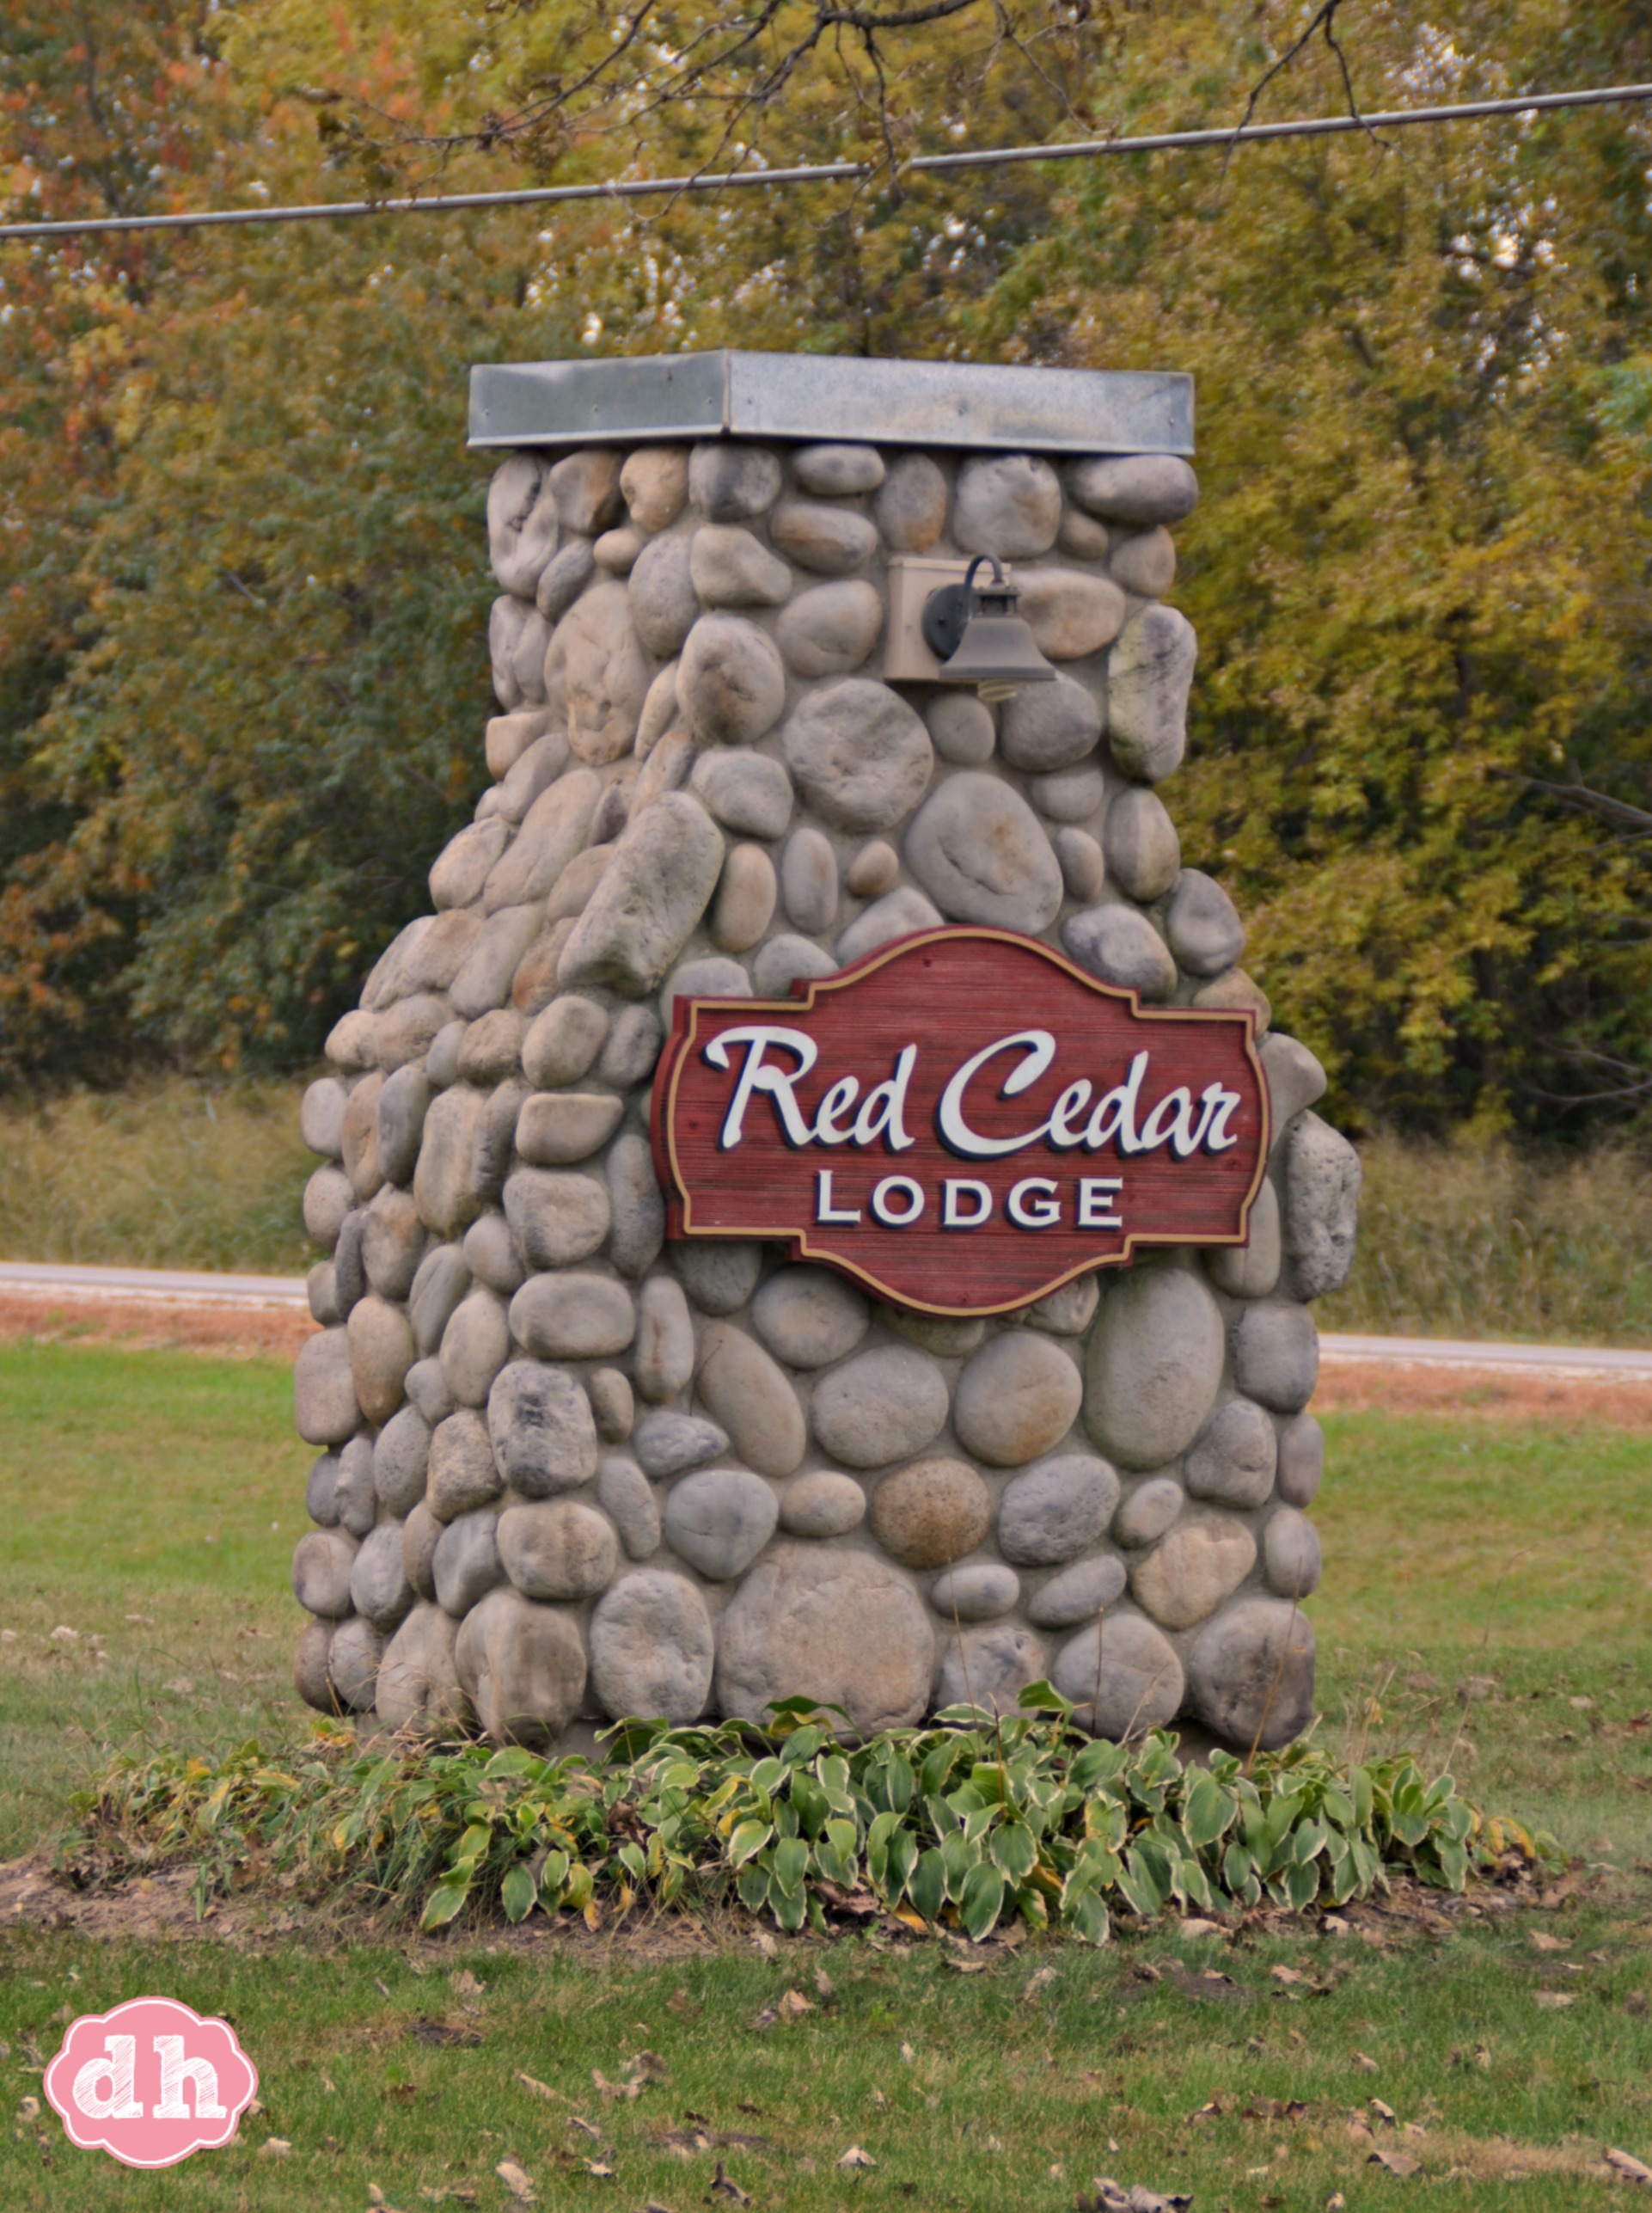 Red Cedar Lodge in Charles City, IA #travel #CharlesCityIA